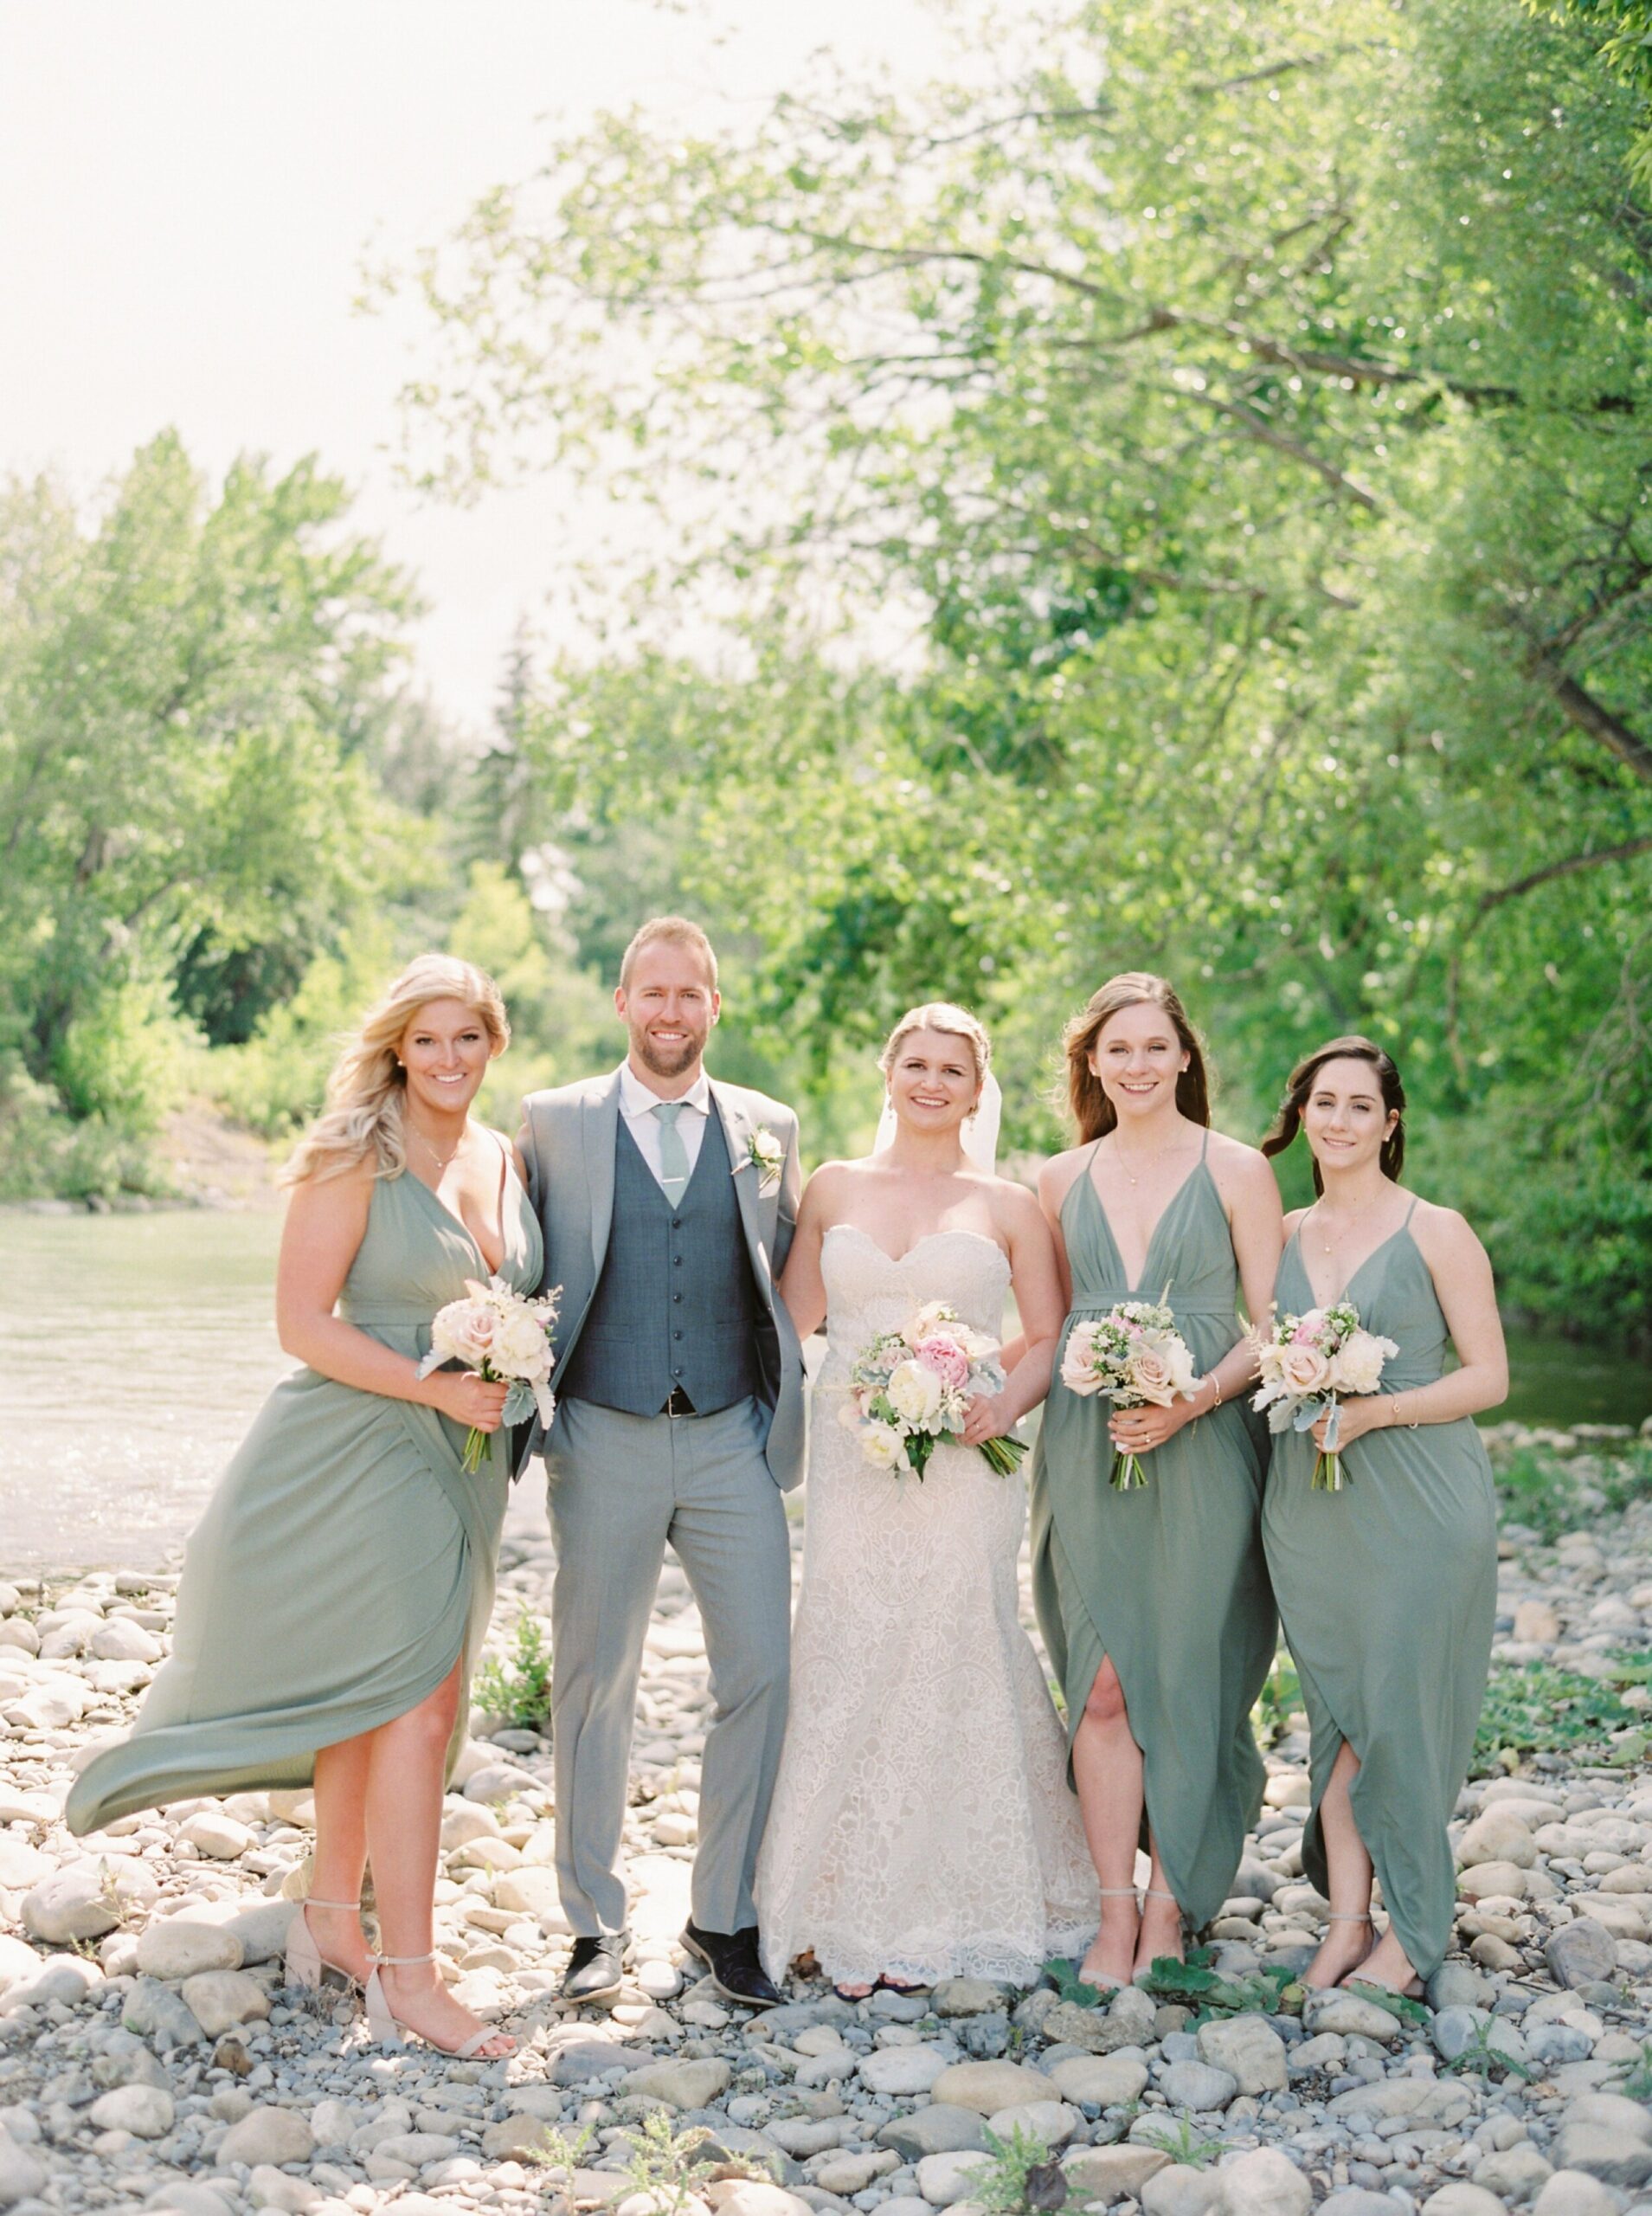  minty sage green bridesmaids and bridesman or bridesbro or brosmaid | Deane House Wedding | Calgary photographer | fine art film photography Justine Milton 